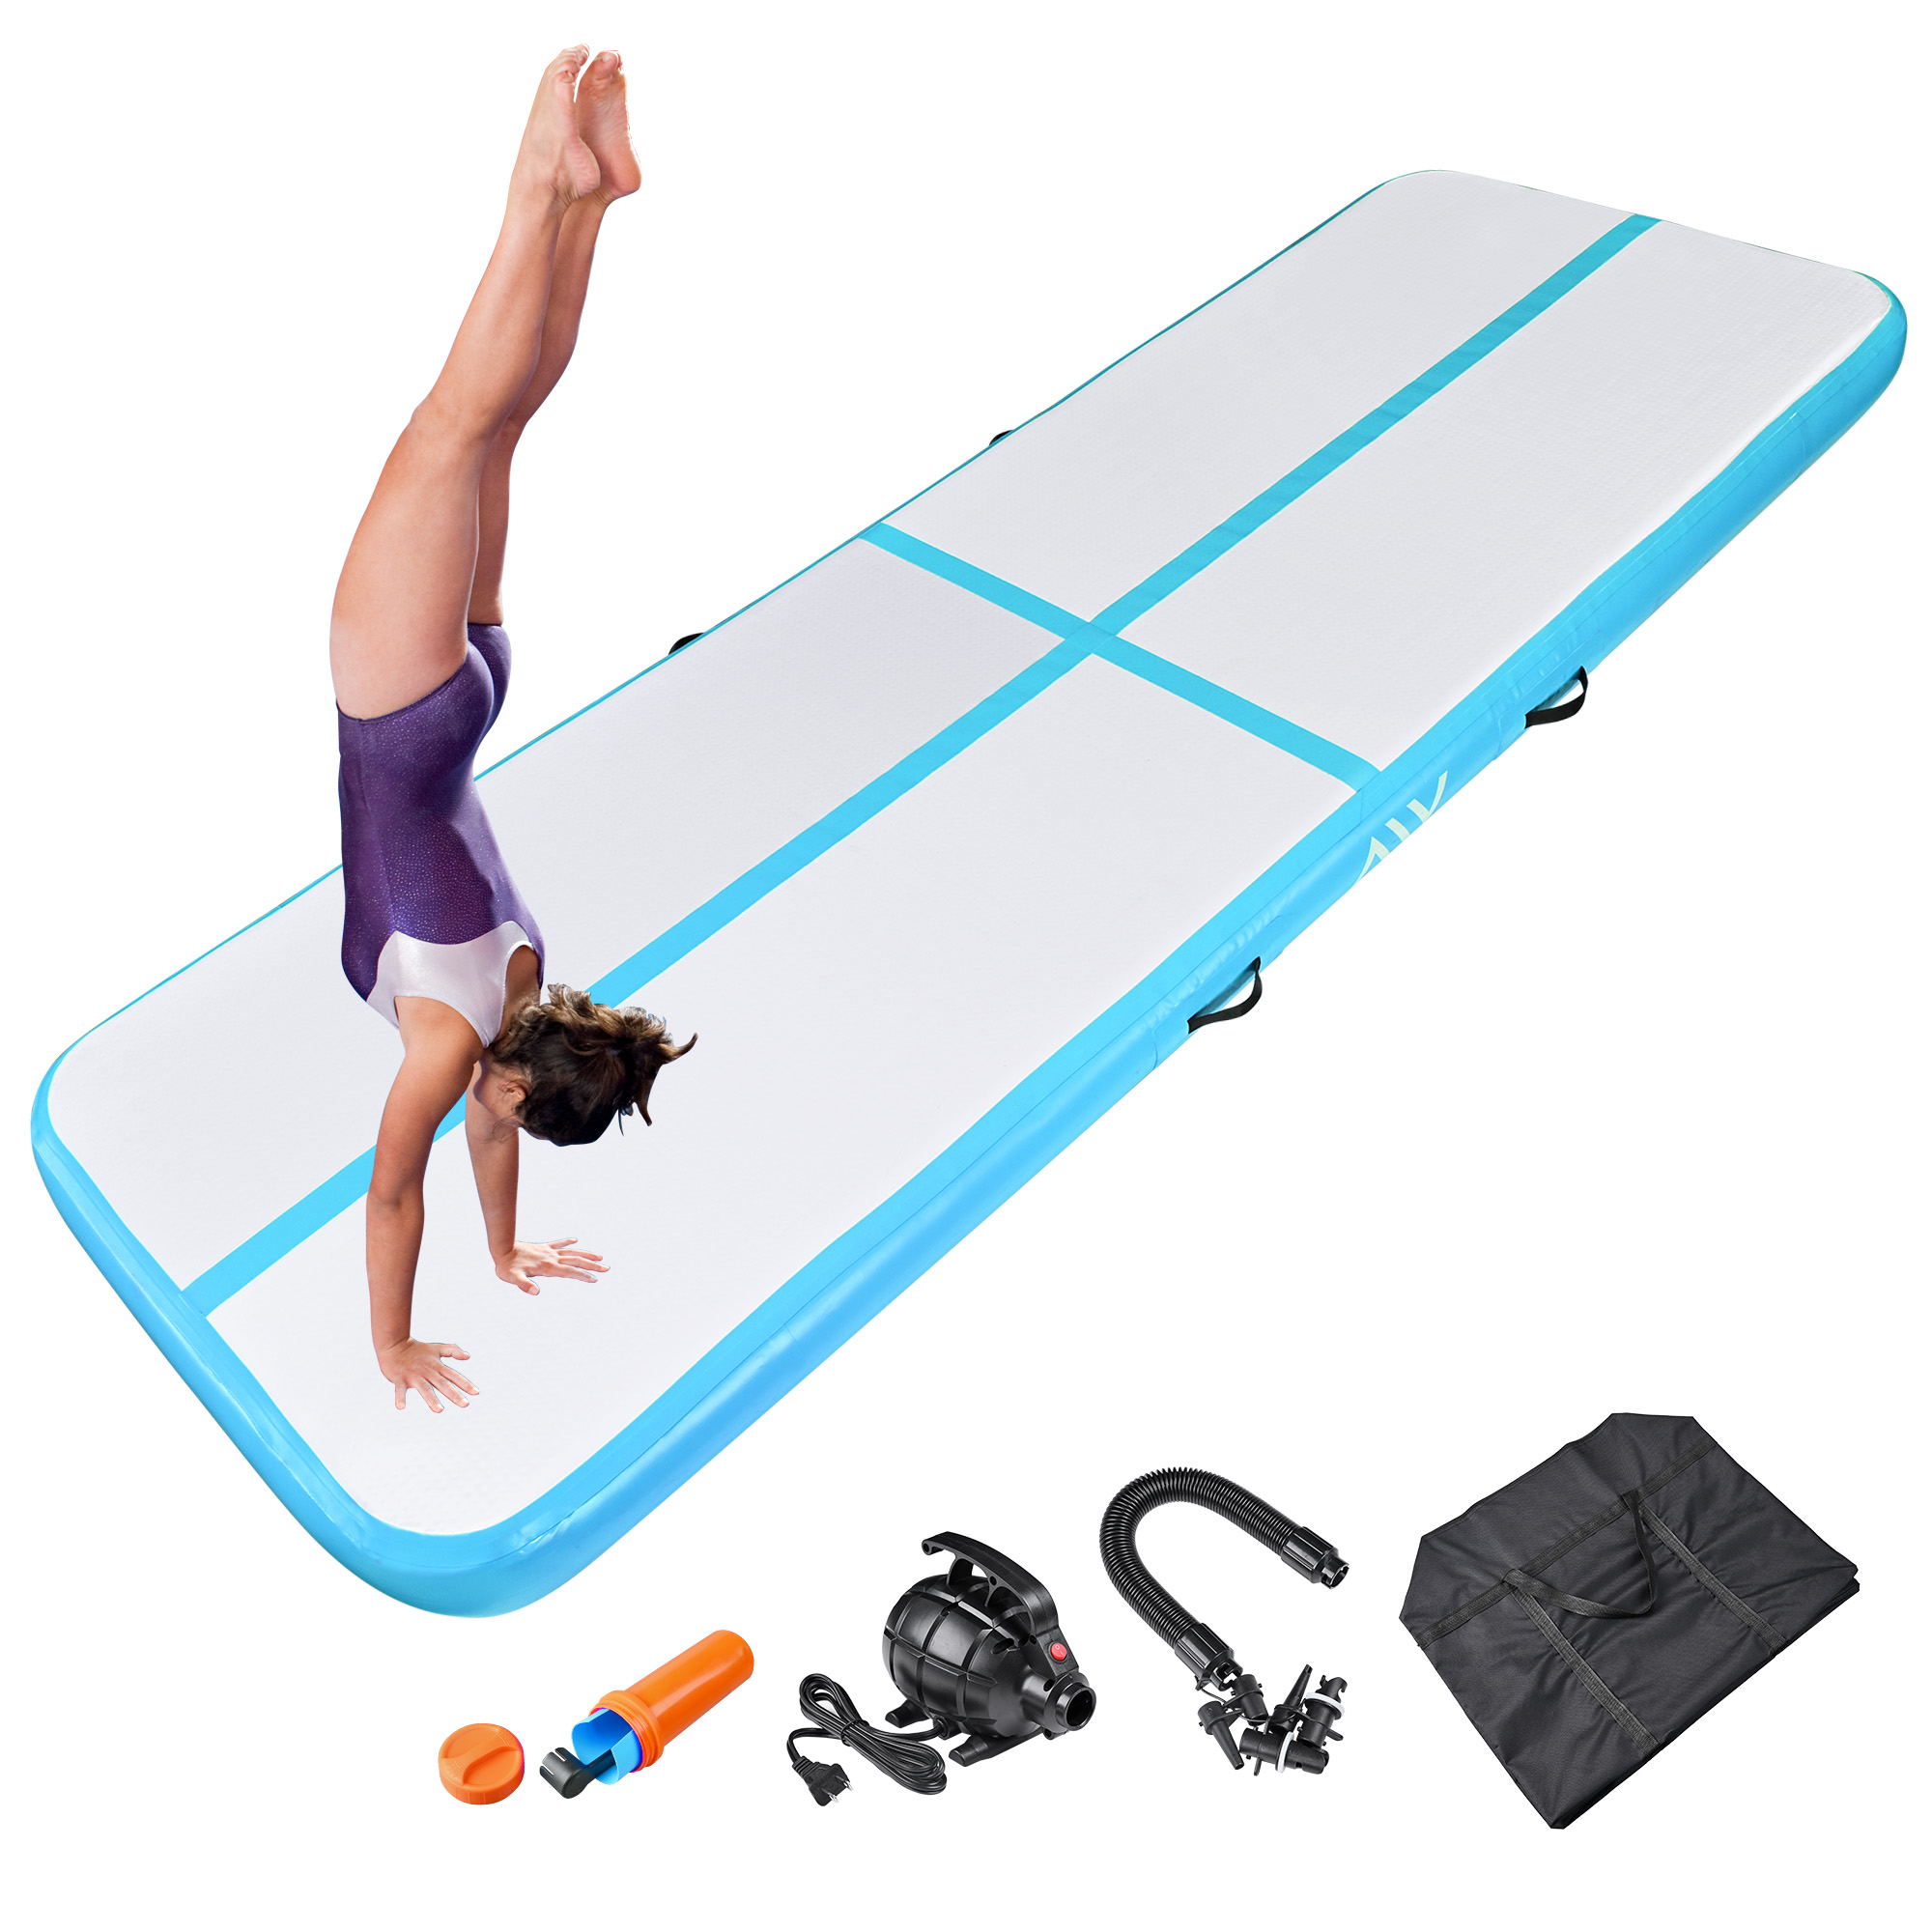 Yescom 10 Ft Air Mat Track Inflatable Tumbling Mat Gymnastics Training Fitness Blue